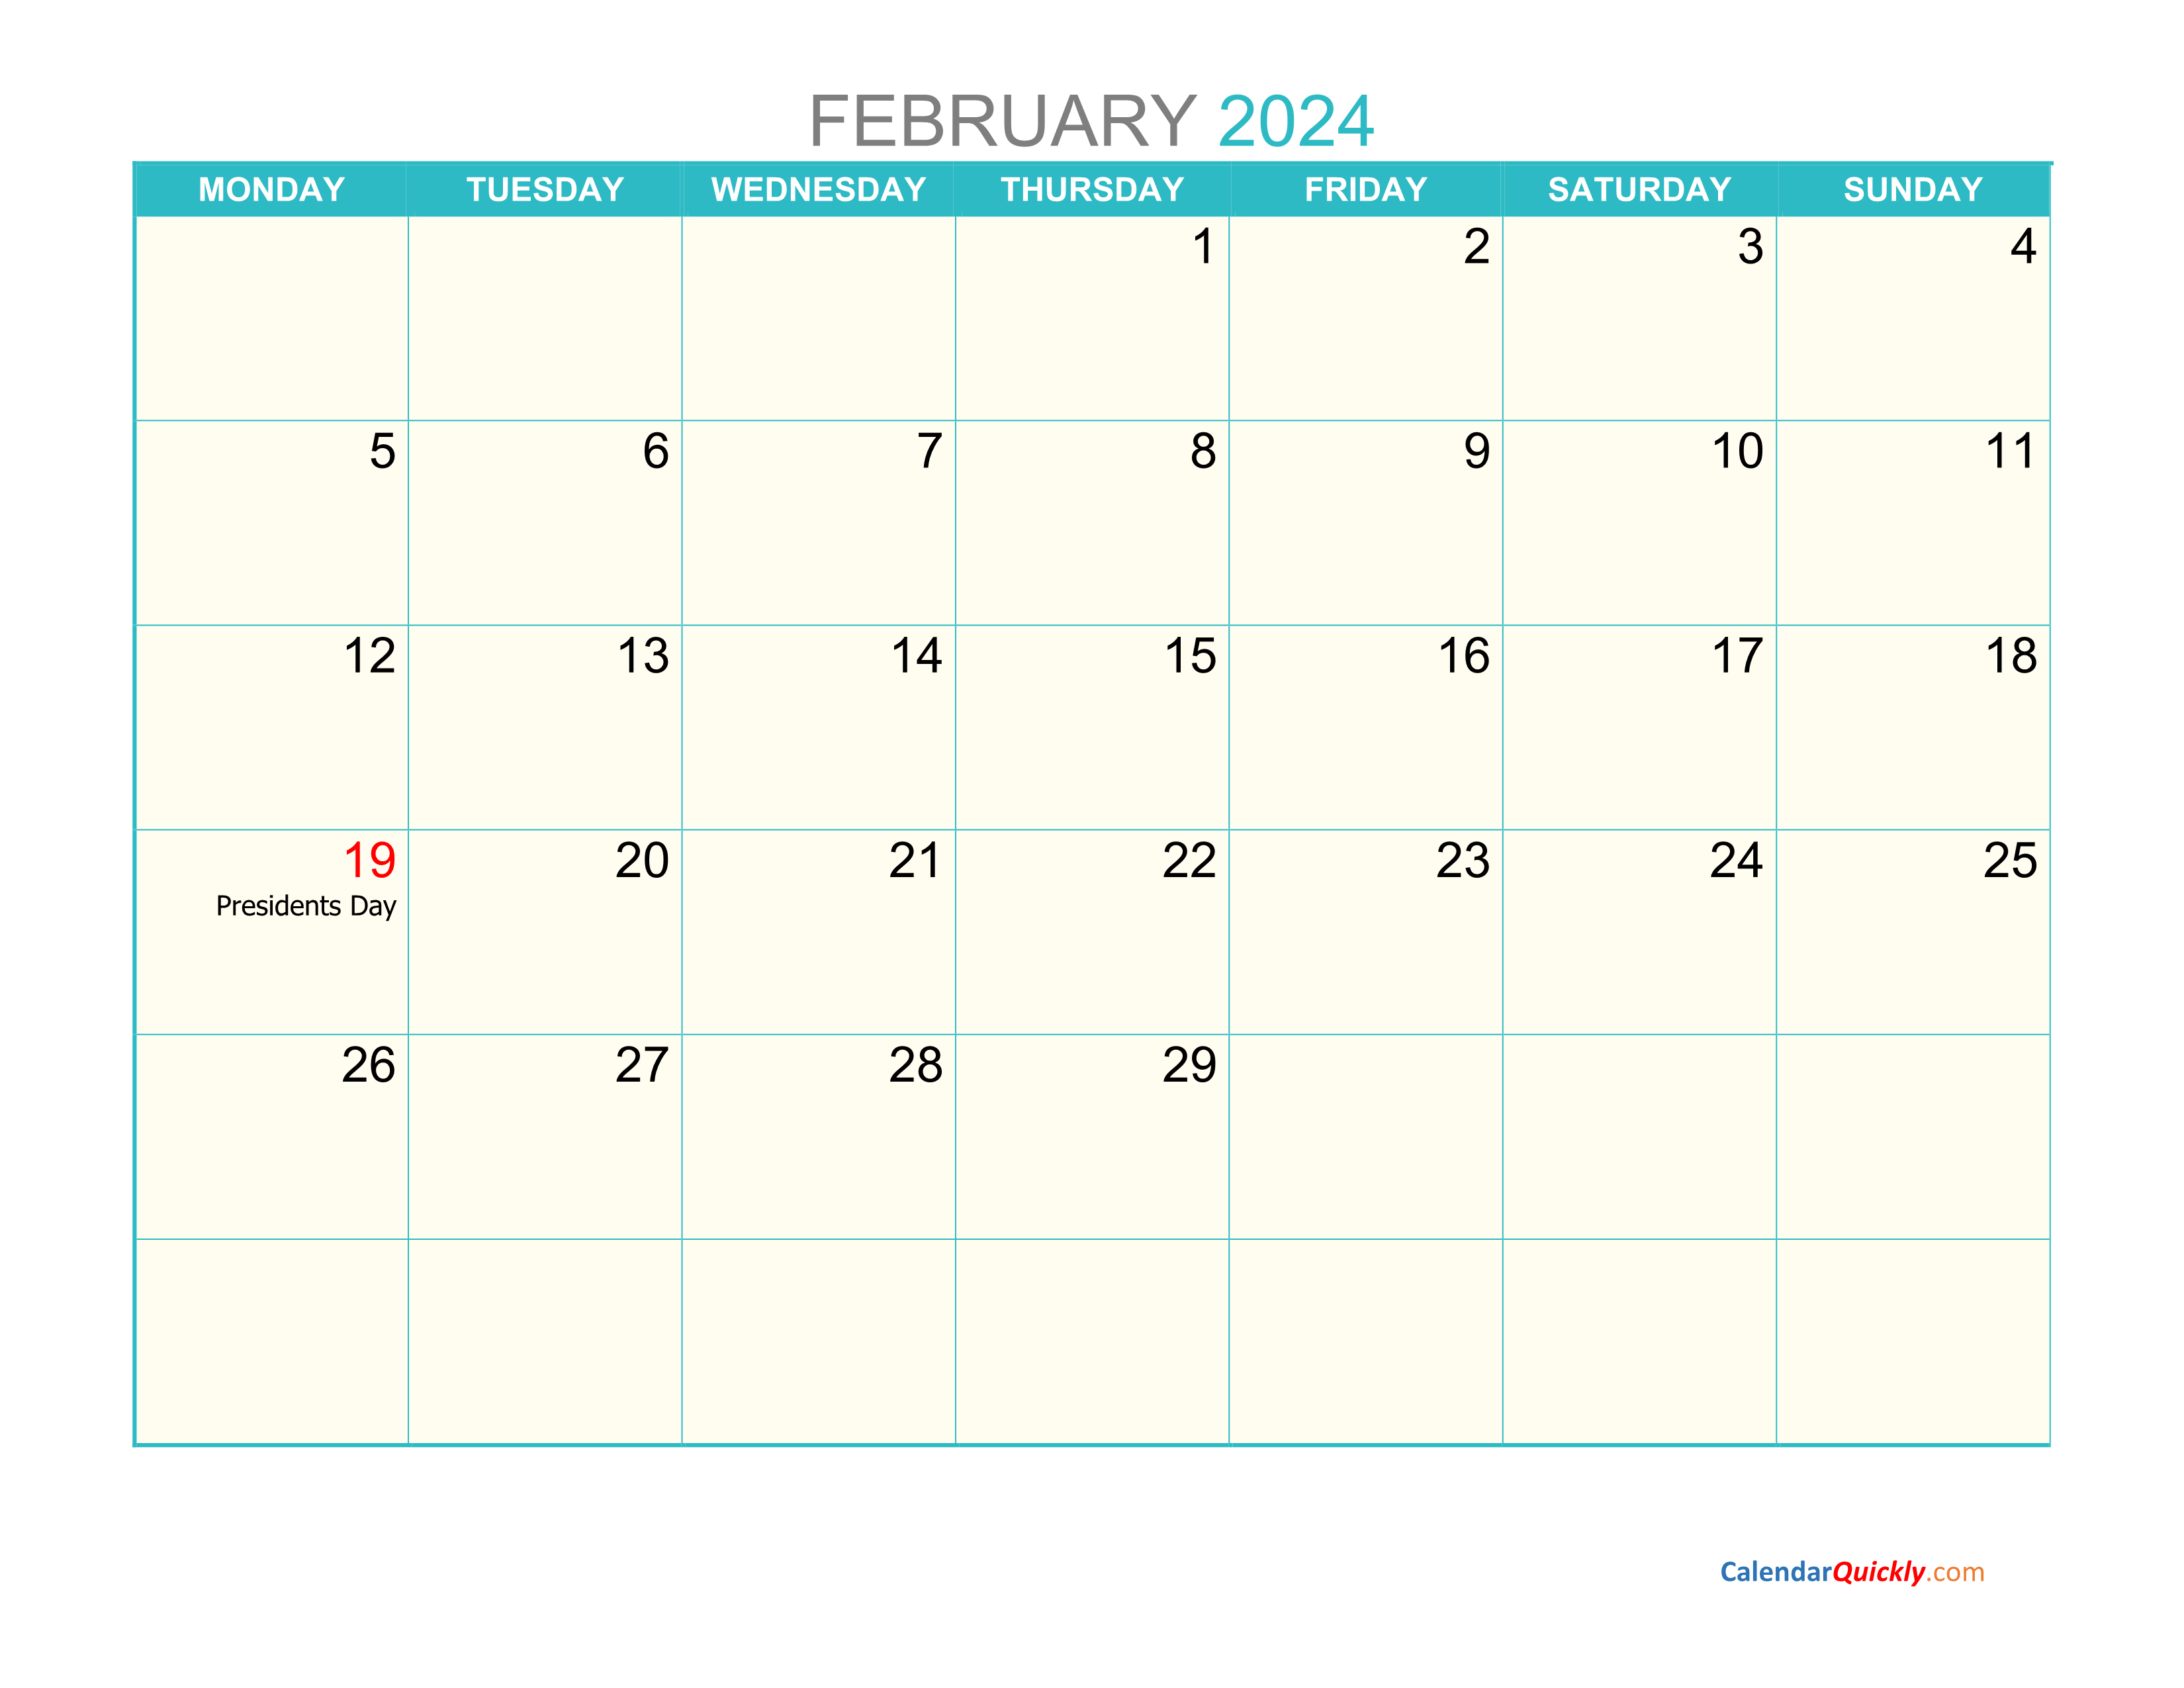 February Monday 2024 Calendar Printable Calendar Quickly